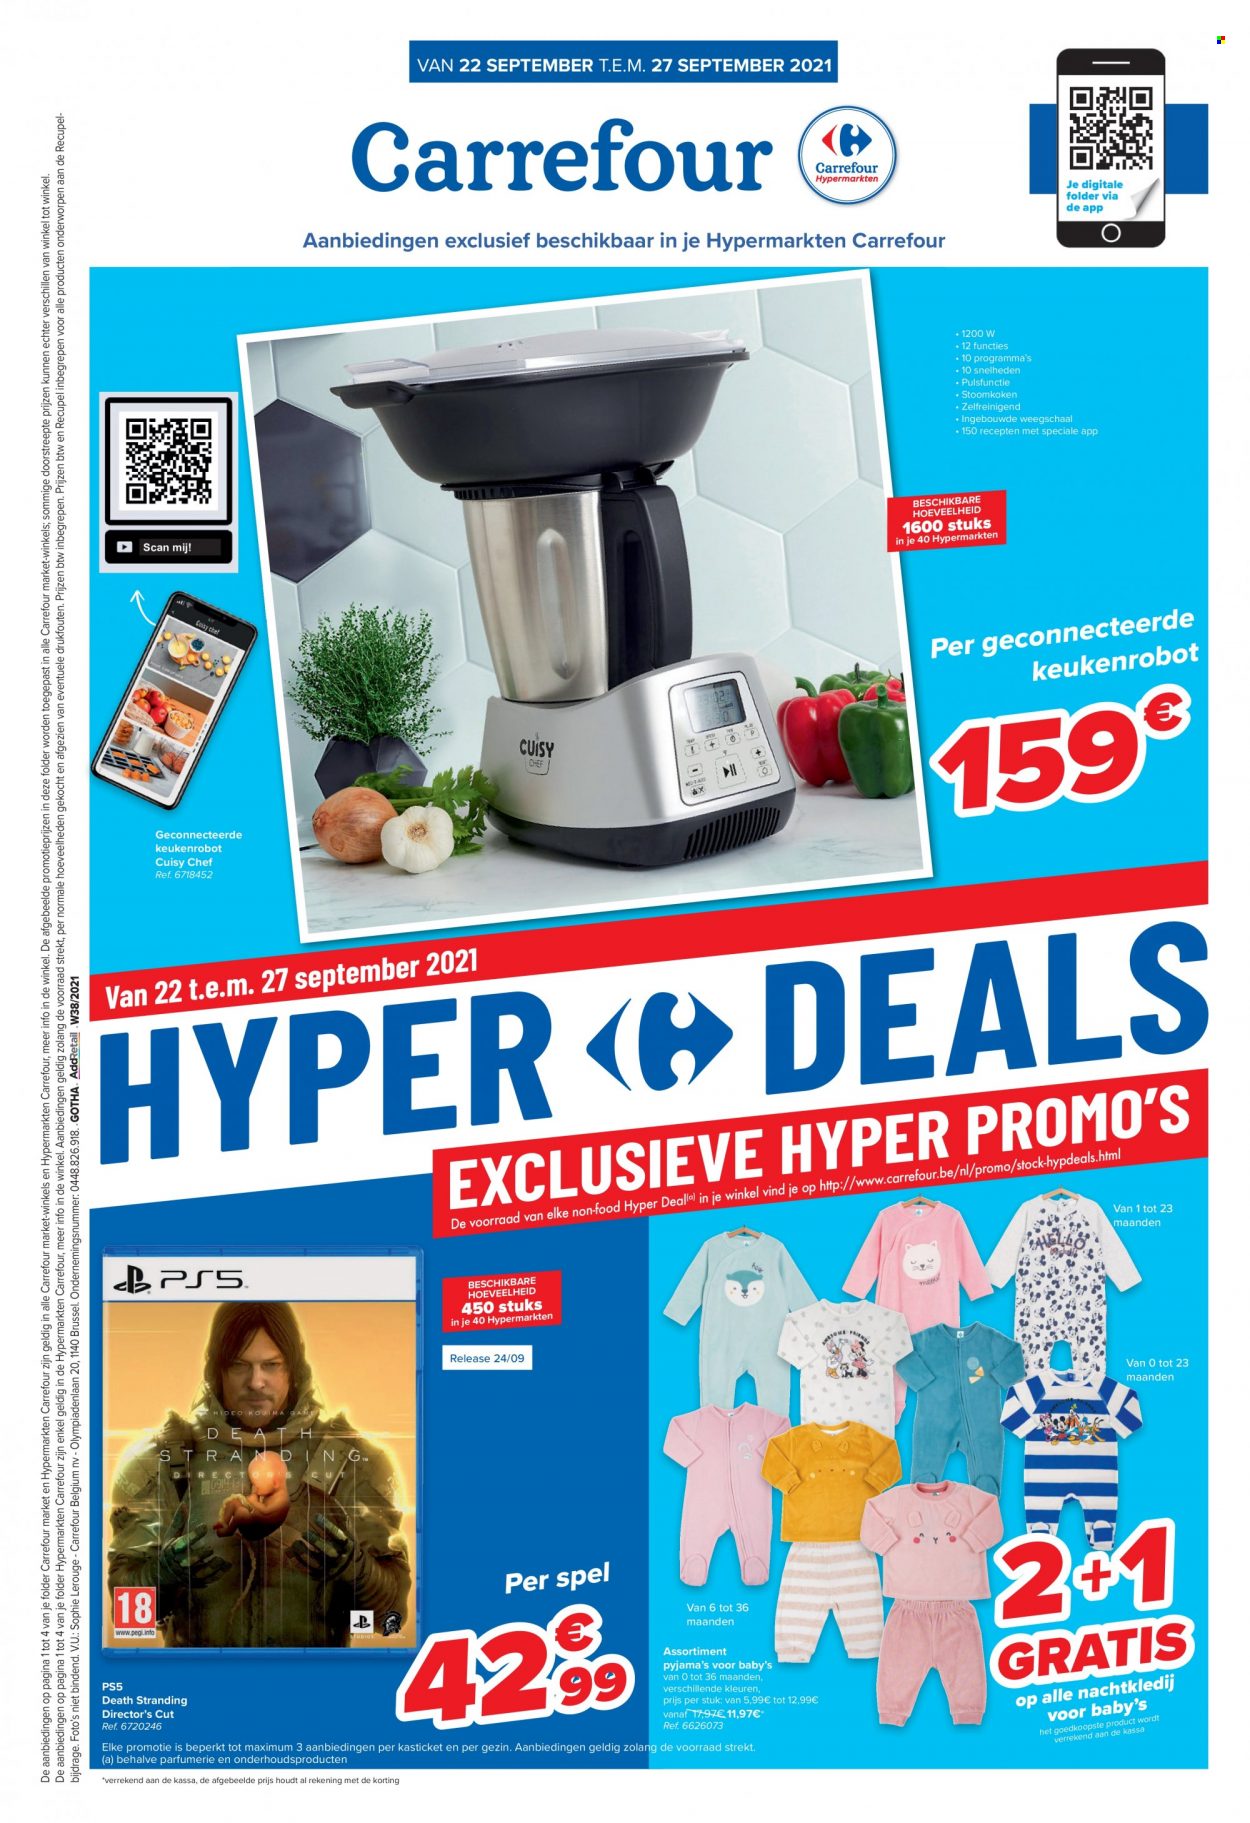 thumbnail - Carrefour hypermarkt-aanbieding - 22/09/2021 - 27/09/2021 -  producten in de aanbieding - PlayStation 5, foto, pyjama. Pagina 1.